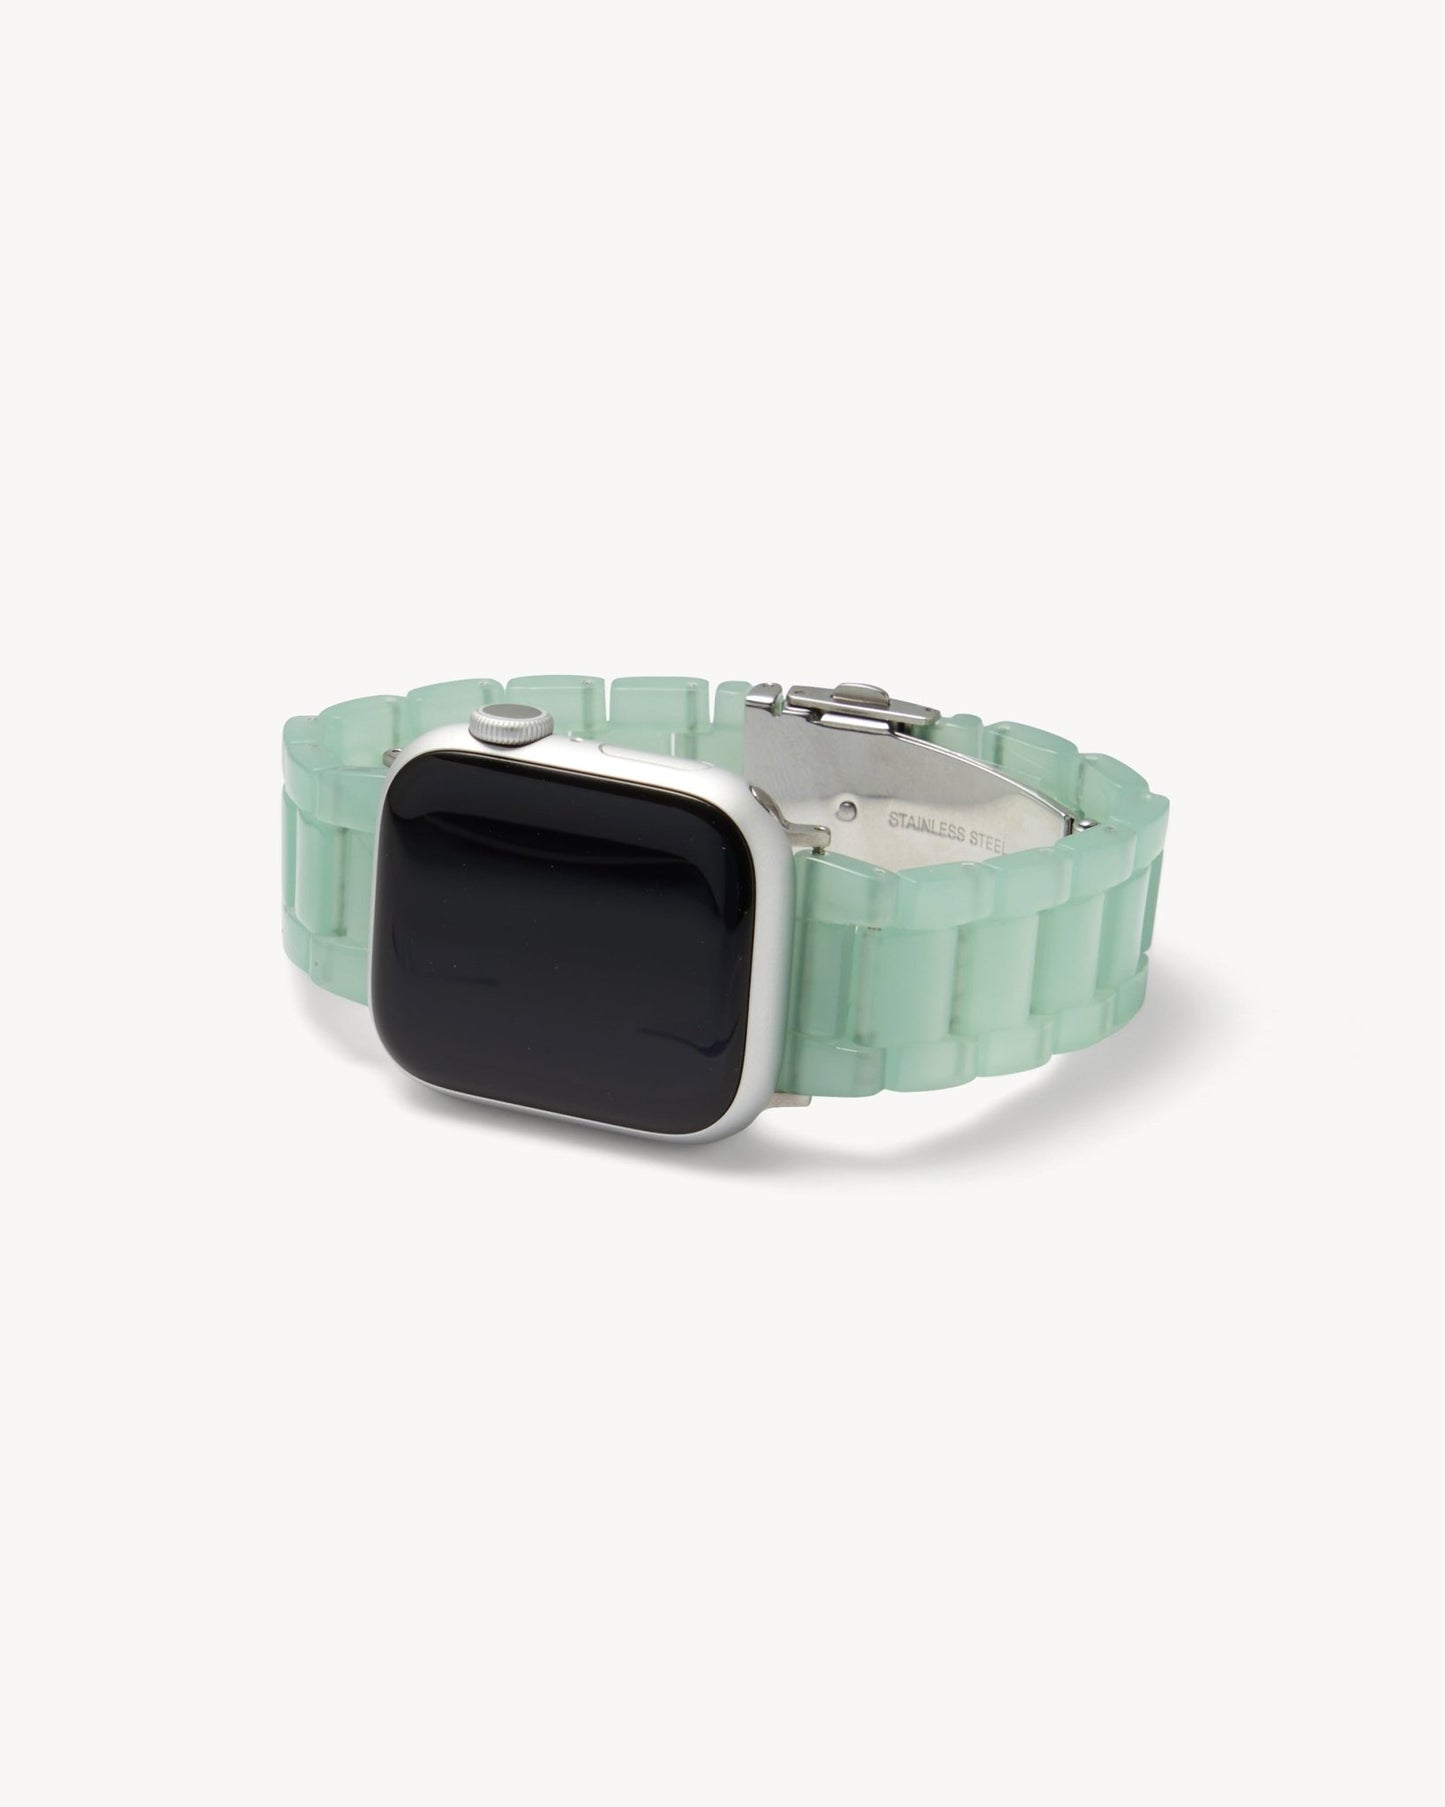 MACHETE Apple Watch Band in Sea Glass